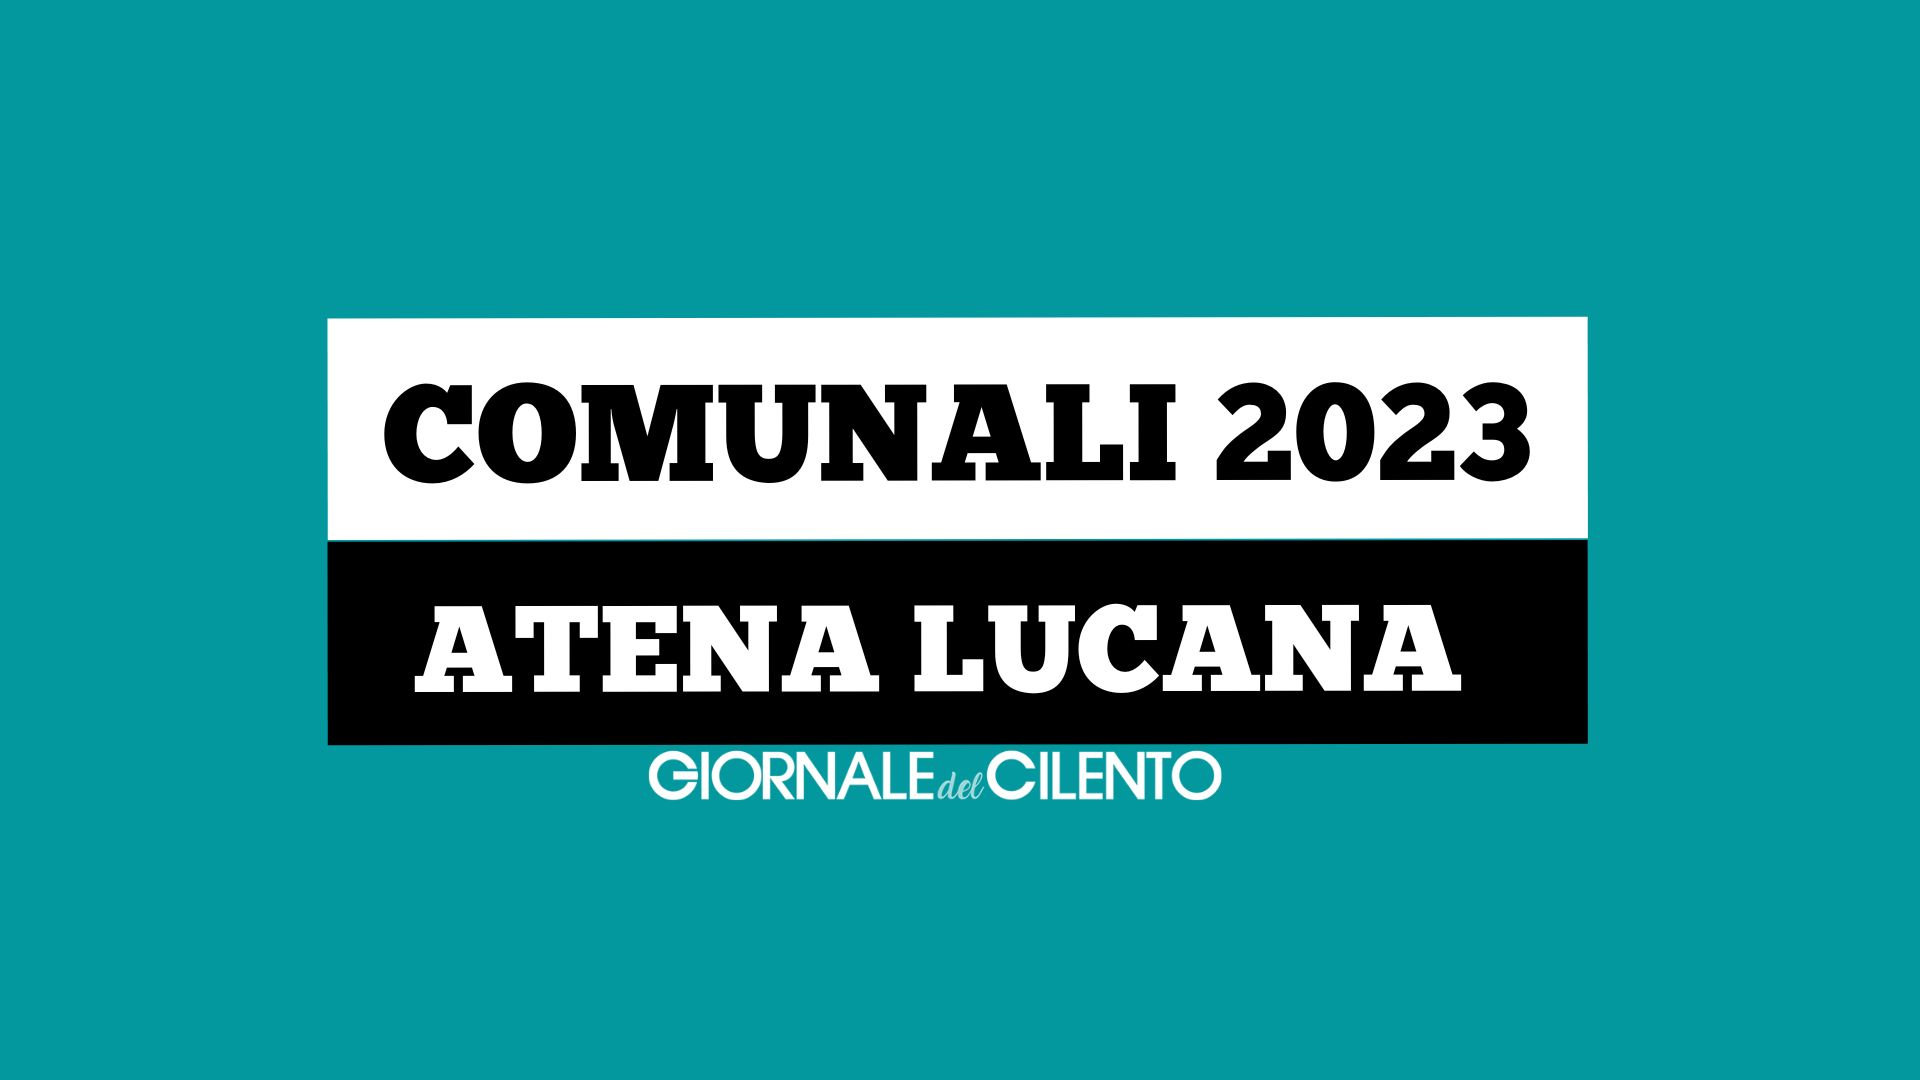 Elezioni comunali 2023, le liste e i candidati ad Atena Lucana